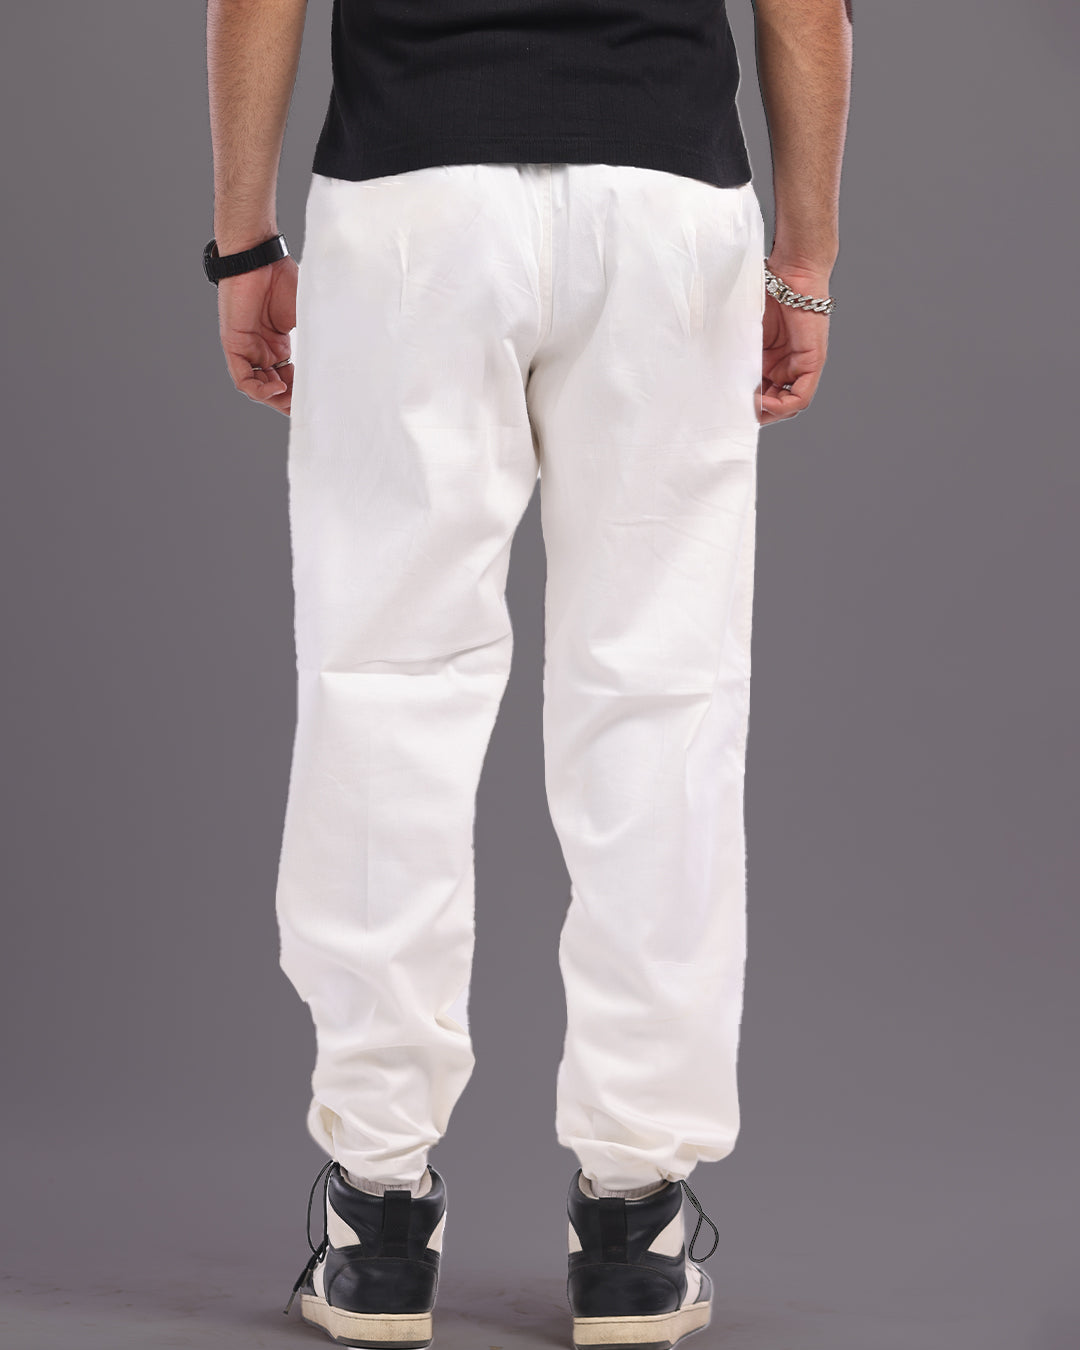 Retro-Inspired Men's White Cargo Adjustable Pant